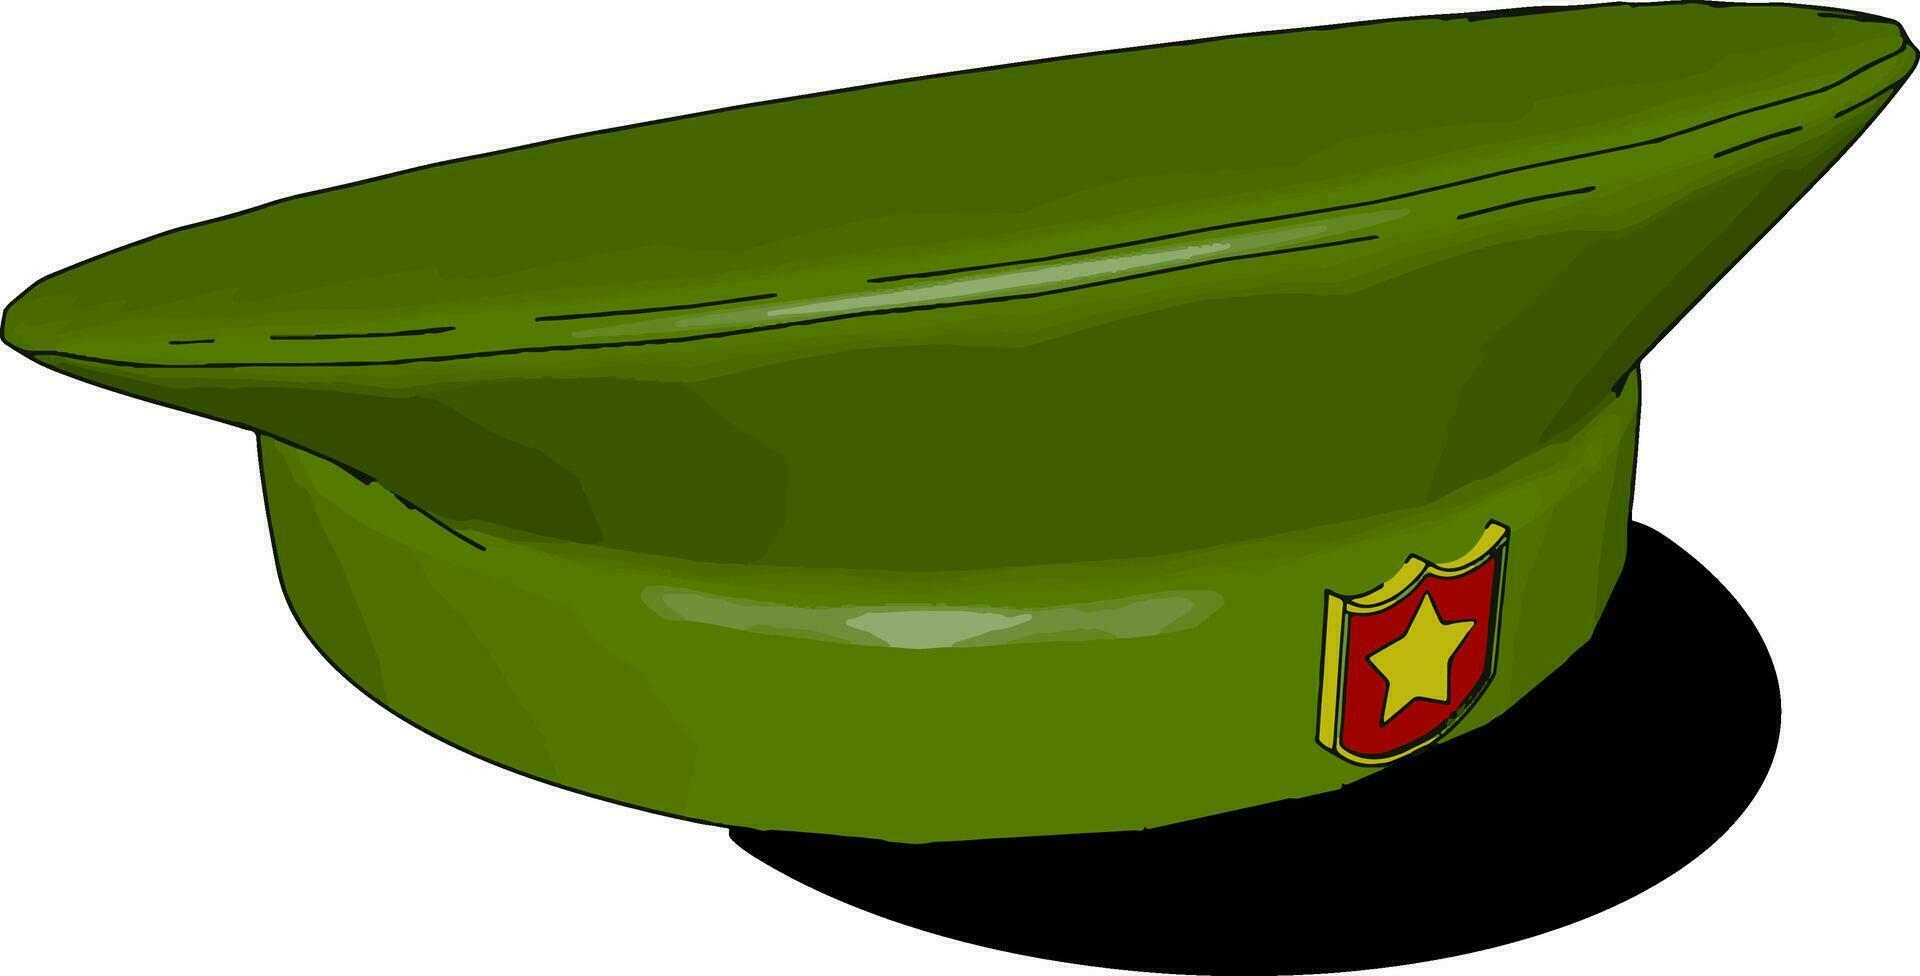 Military hat, illustration, vector on white background.